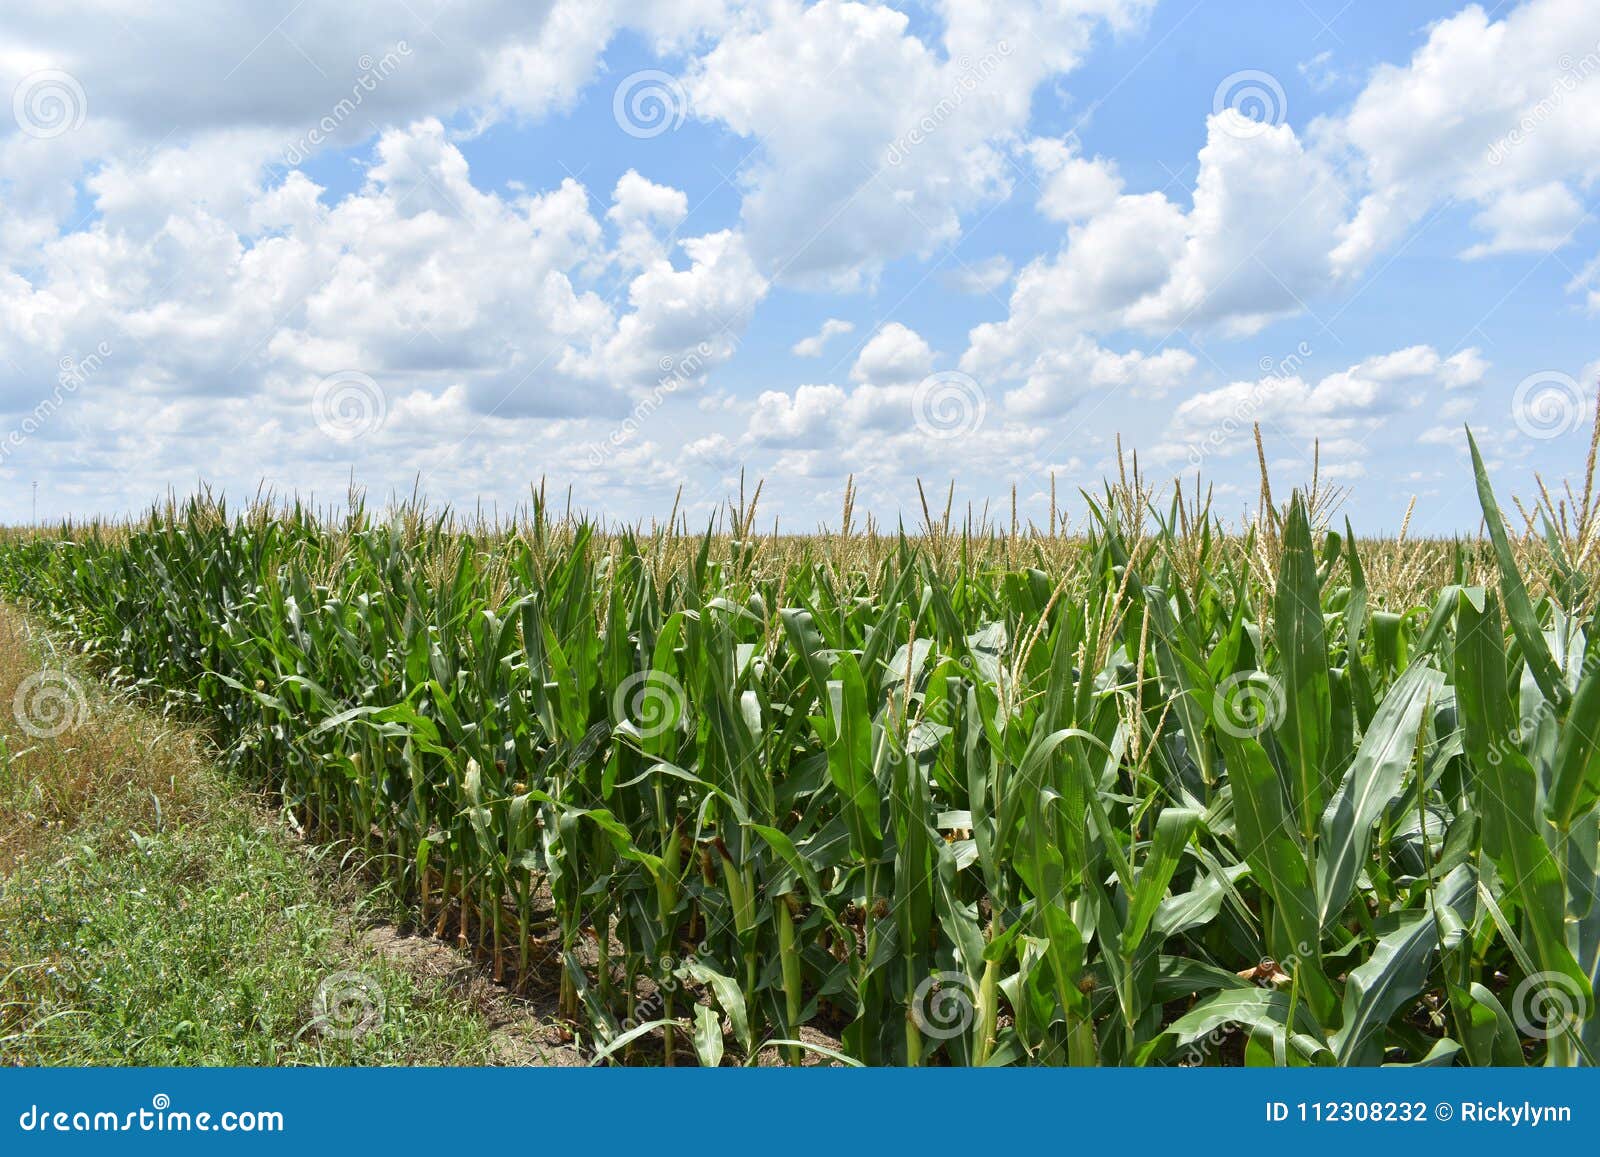 Corn field near the road stock photo. Image of corn - 112308232